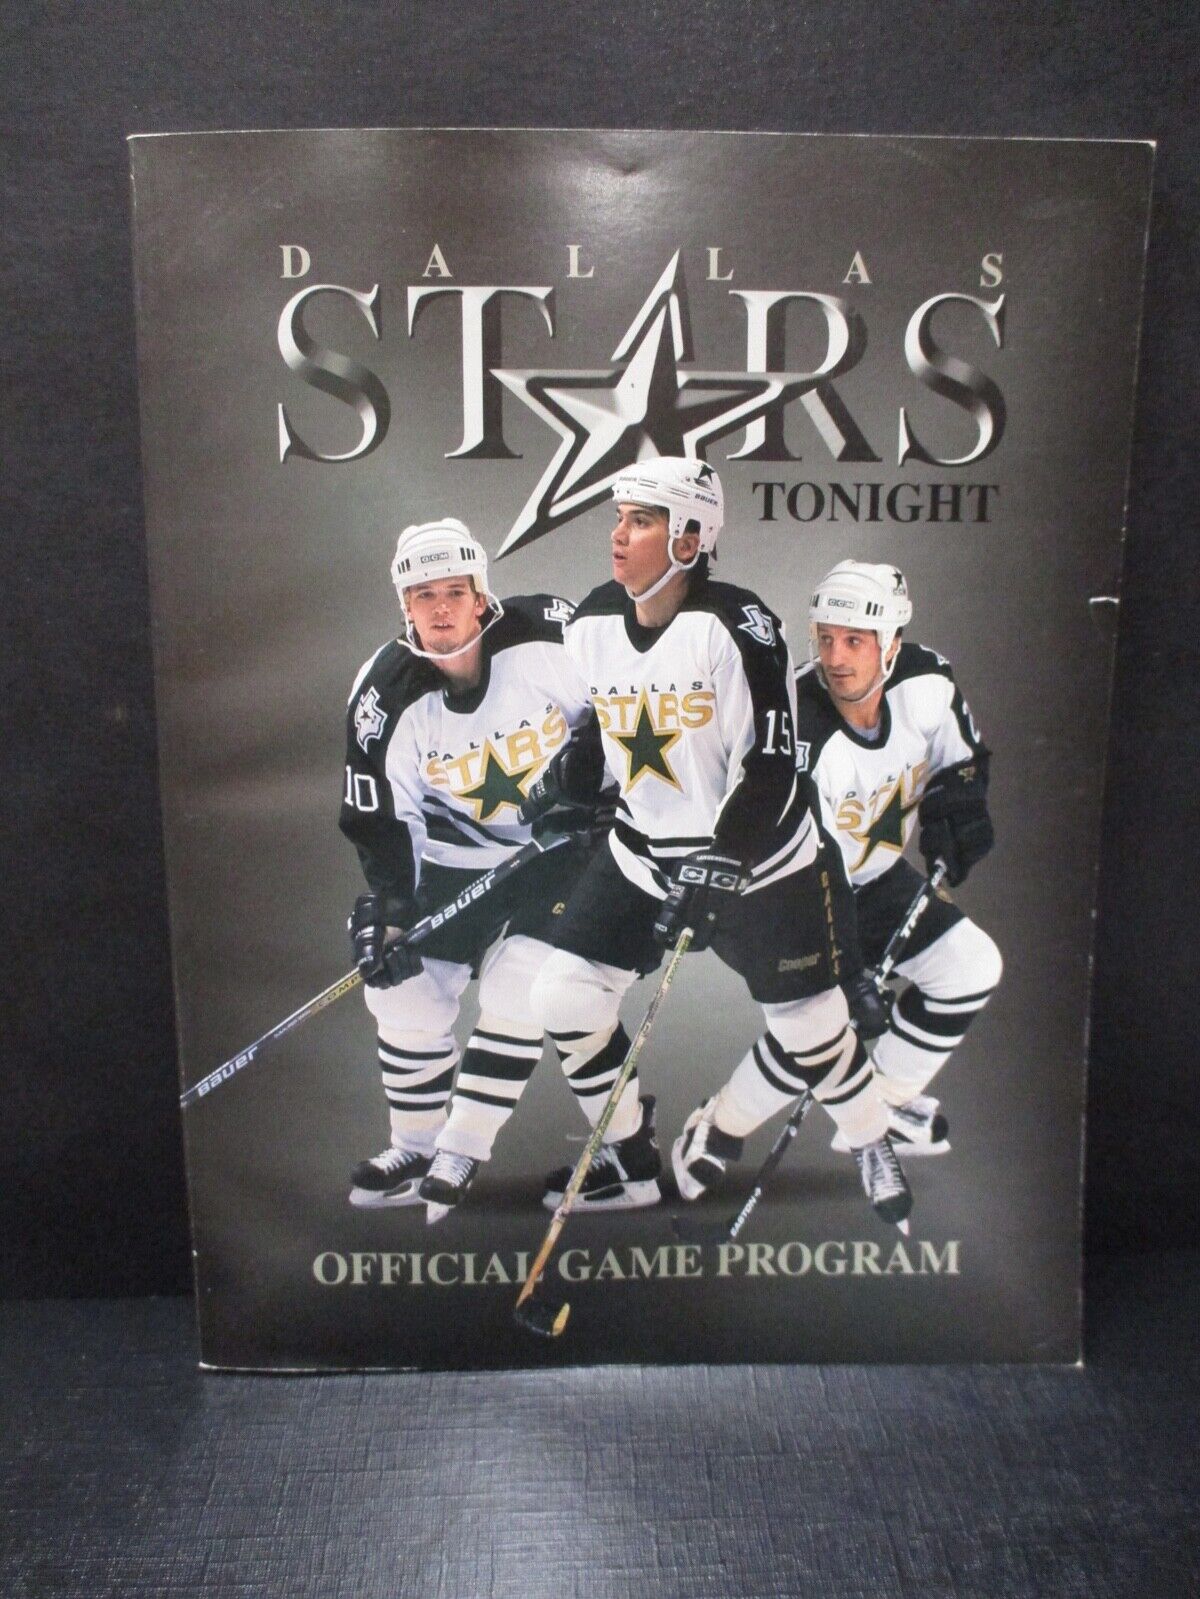 1997 / 1998 Dallas Stars vs Colorado Avalanche Official Vintage Game Program